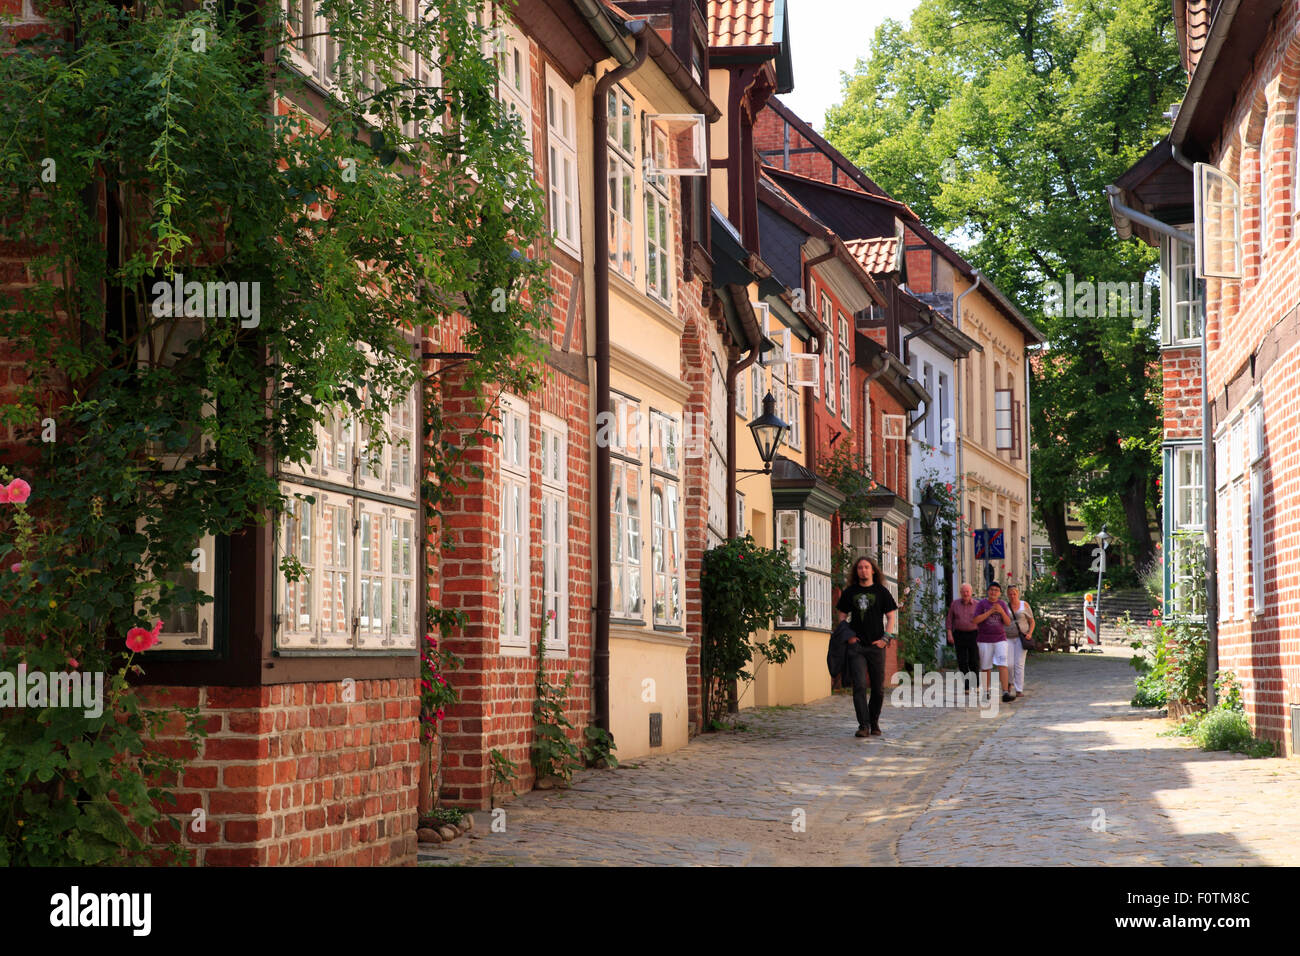 Old town, street Auf dem Meere, Lueneburg, Lüneburg, Lower Saxony, Germany, Europe Stock Photo